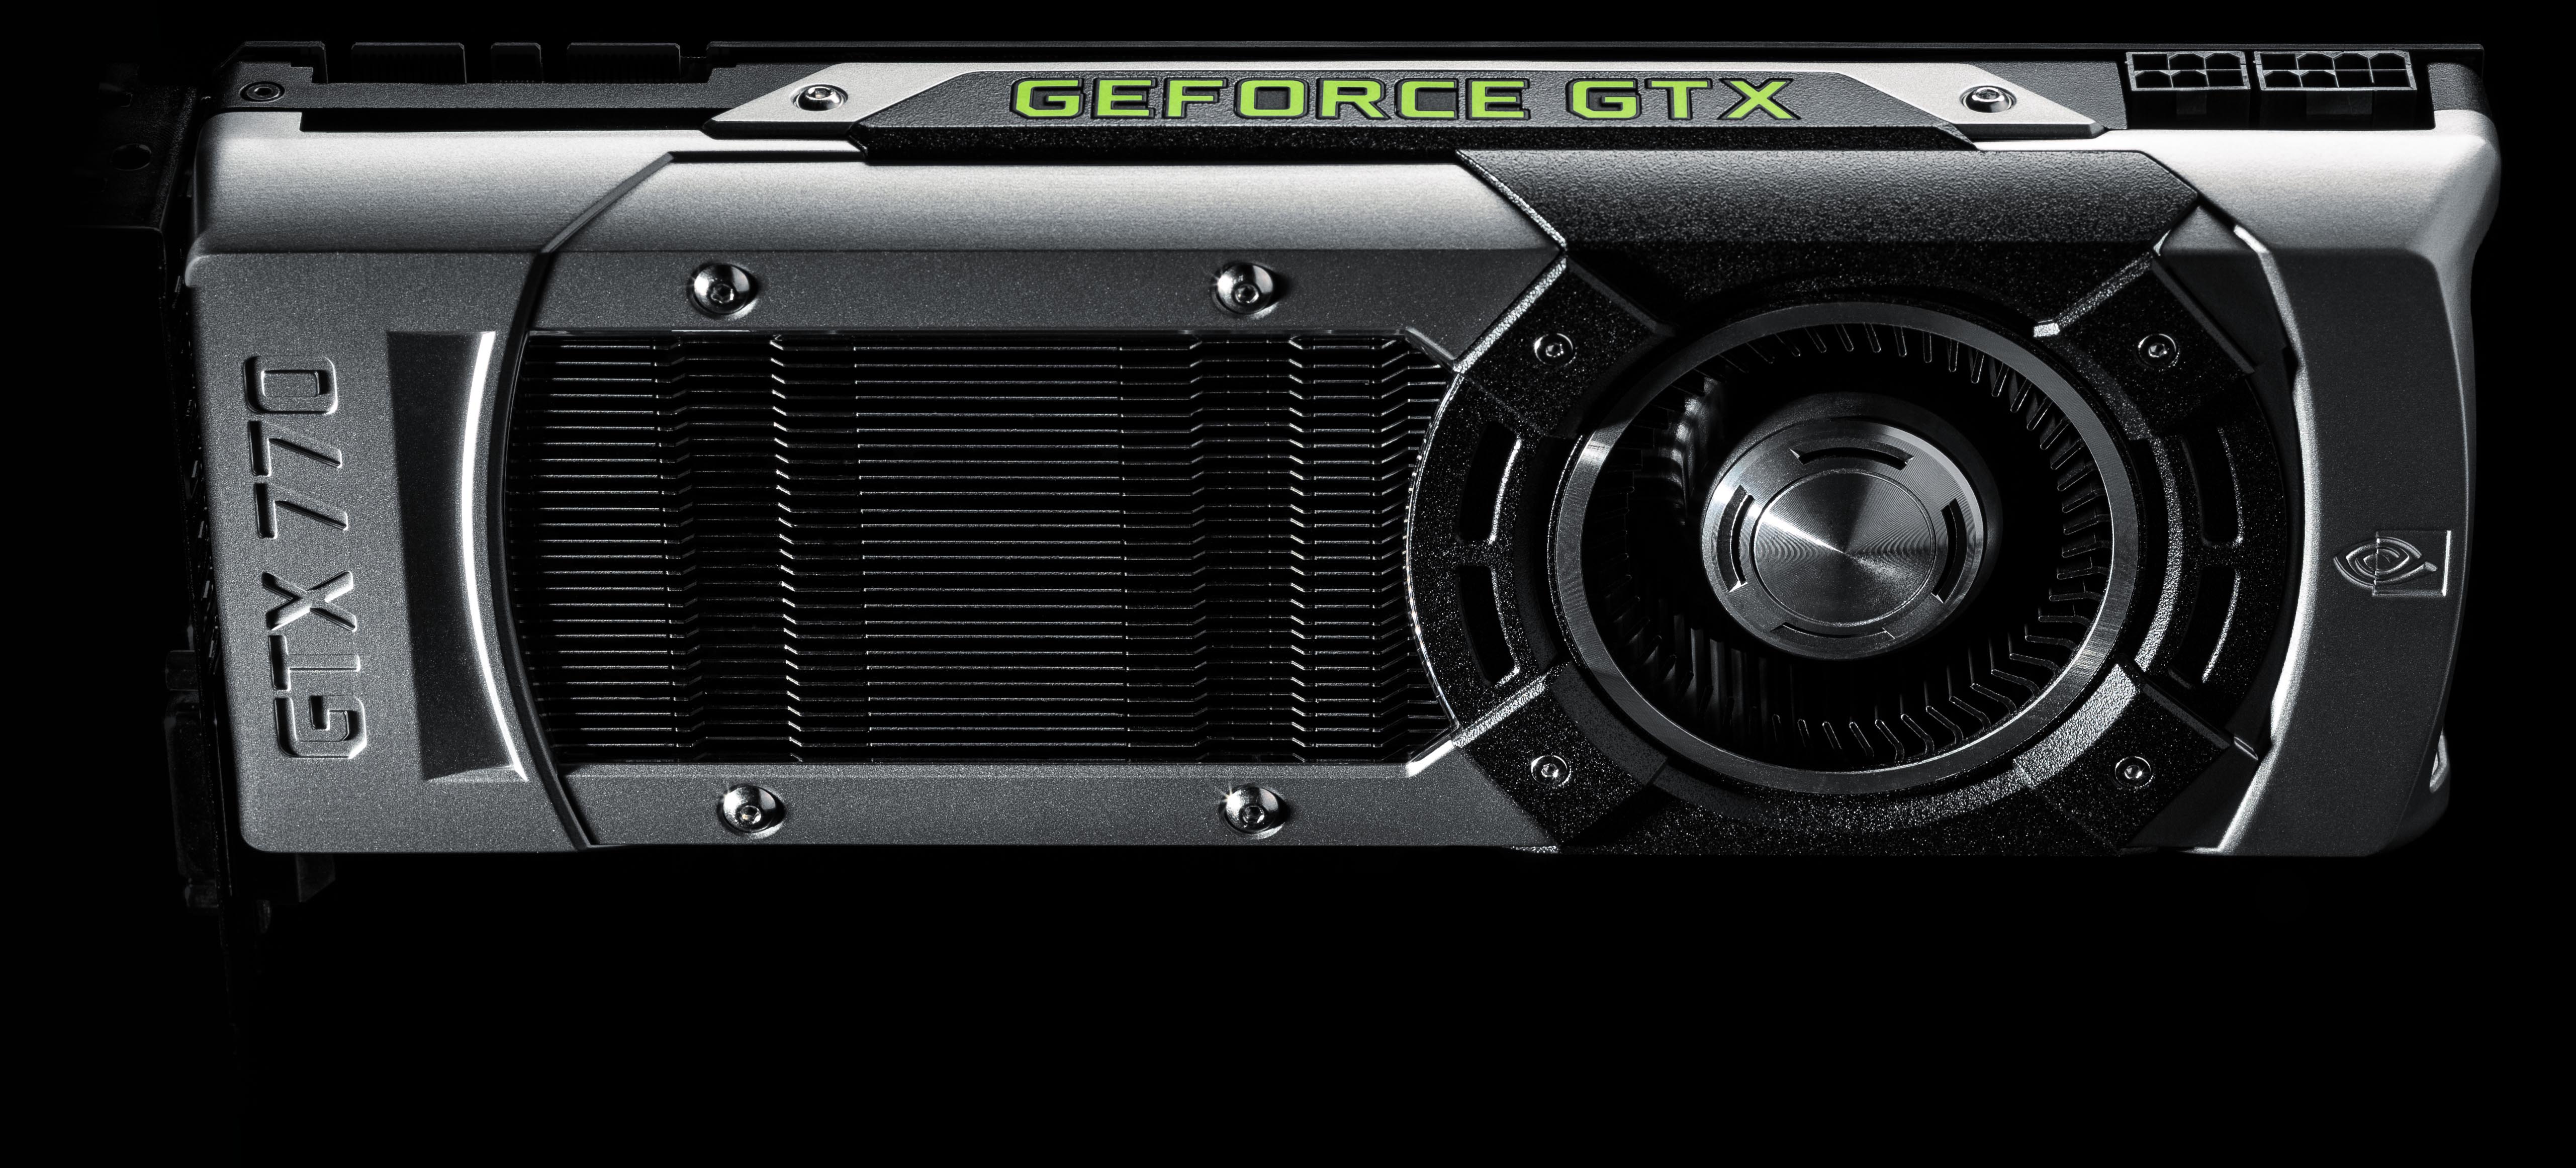 Leadership With New GeForce GTX 770 GPU